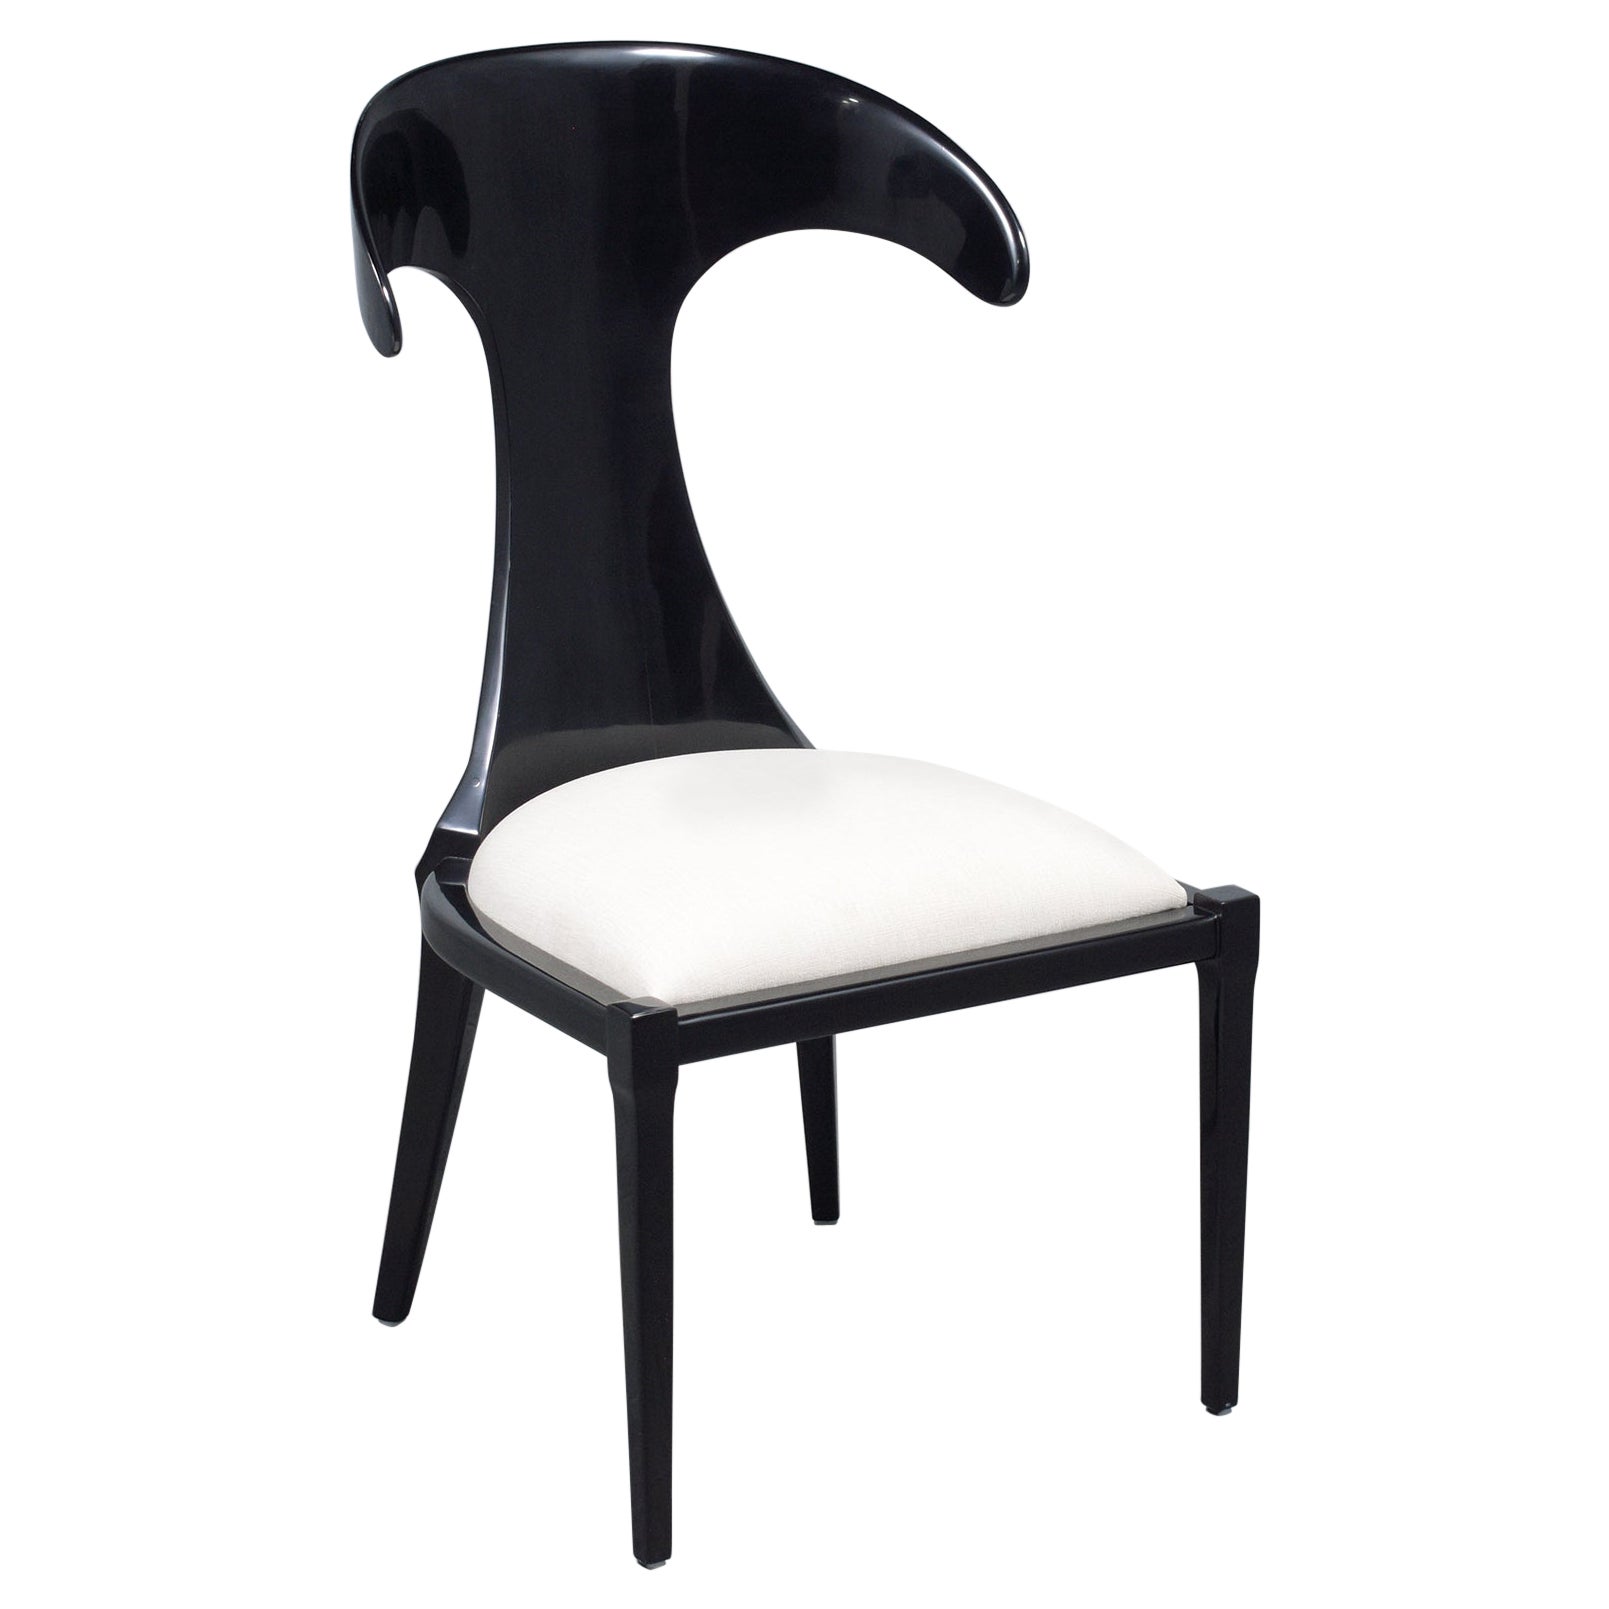 Ebonized Modernism Side Chair: Refinished Bent Wood with High Backrest Design